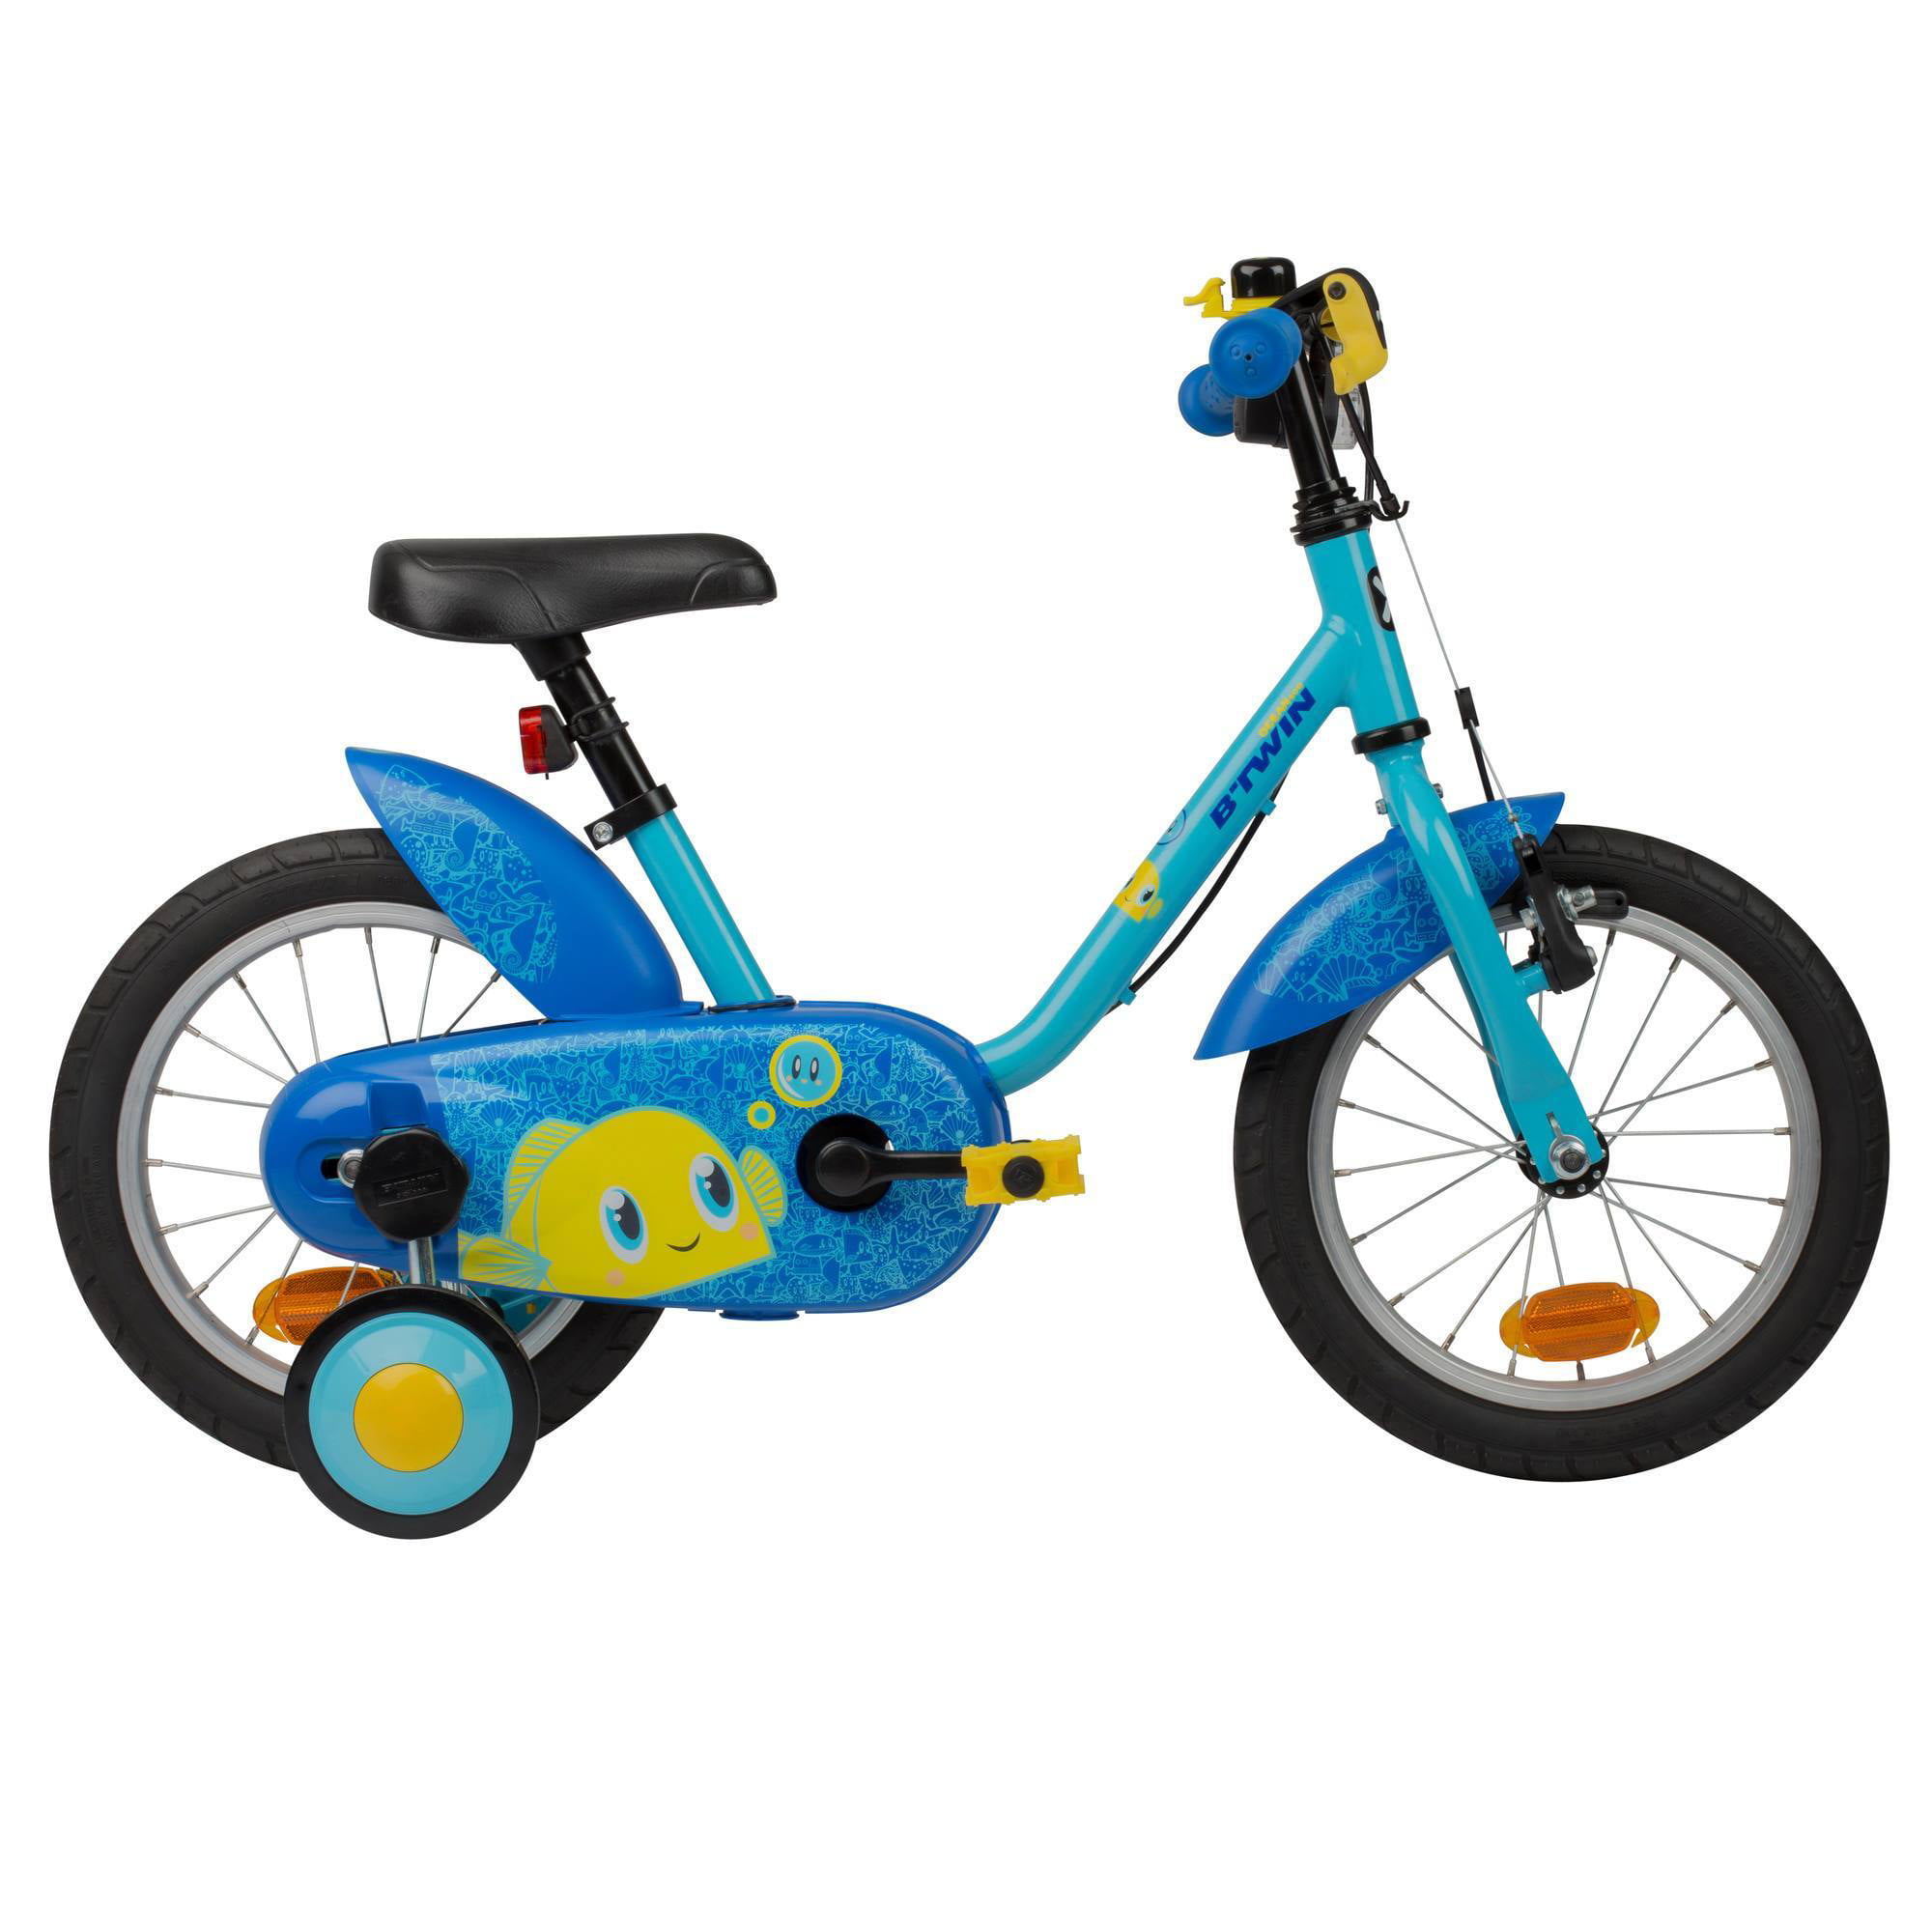 btwin blue bike